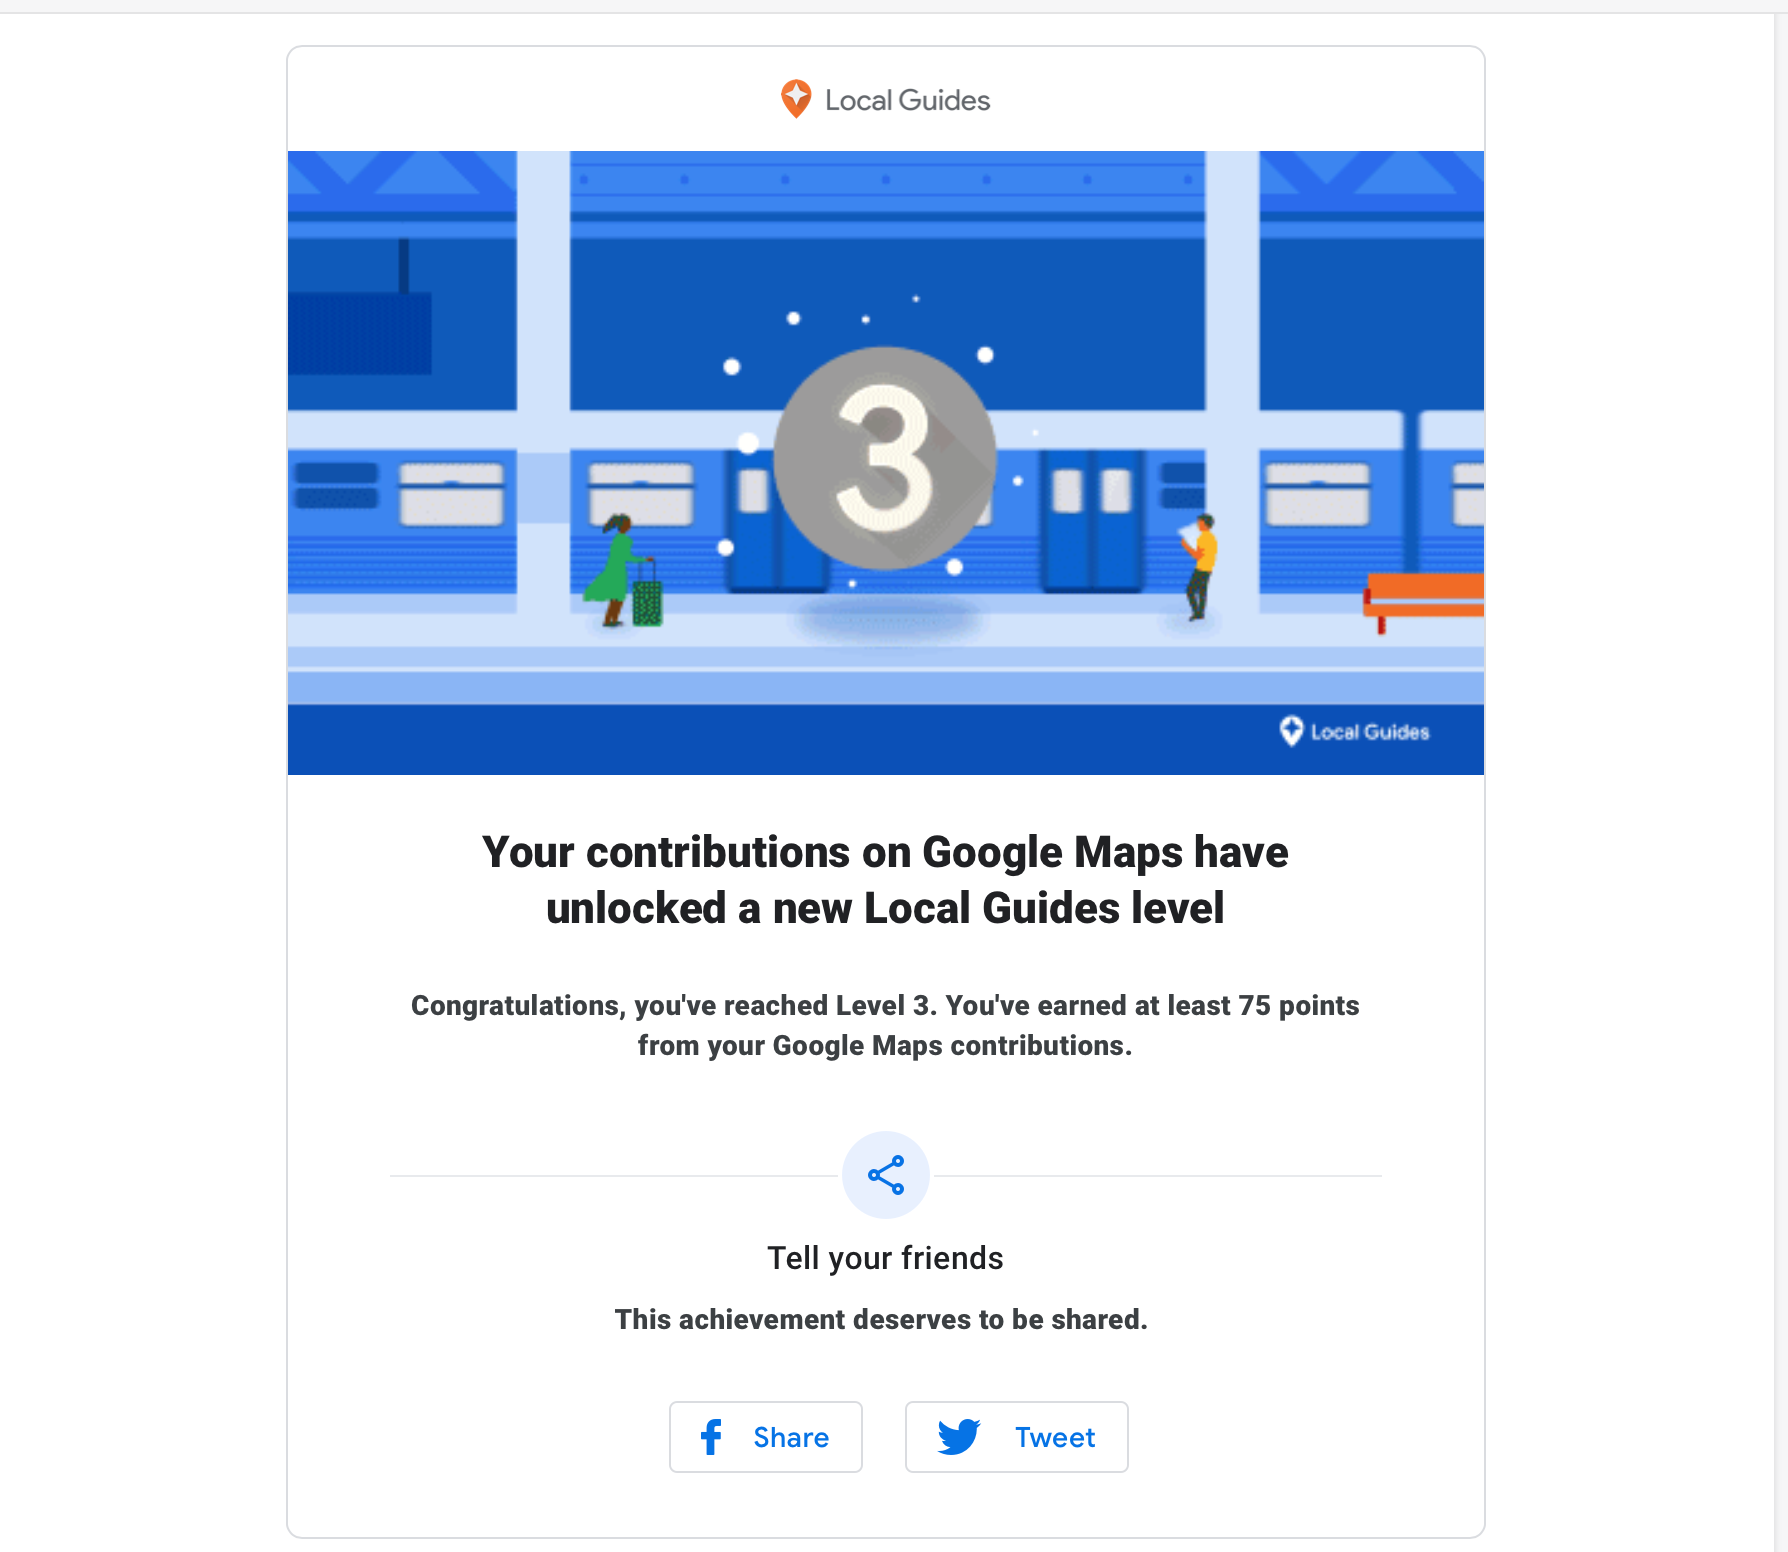 Google Maps motivize users thorugh email